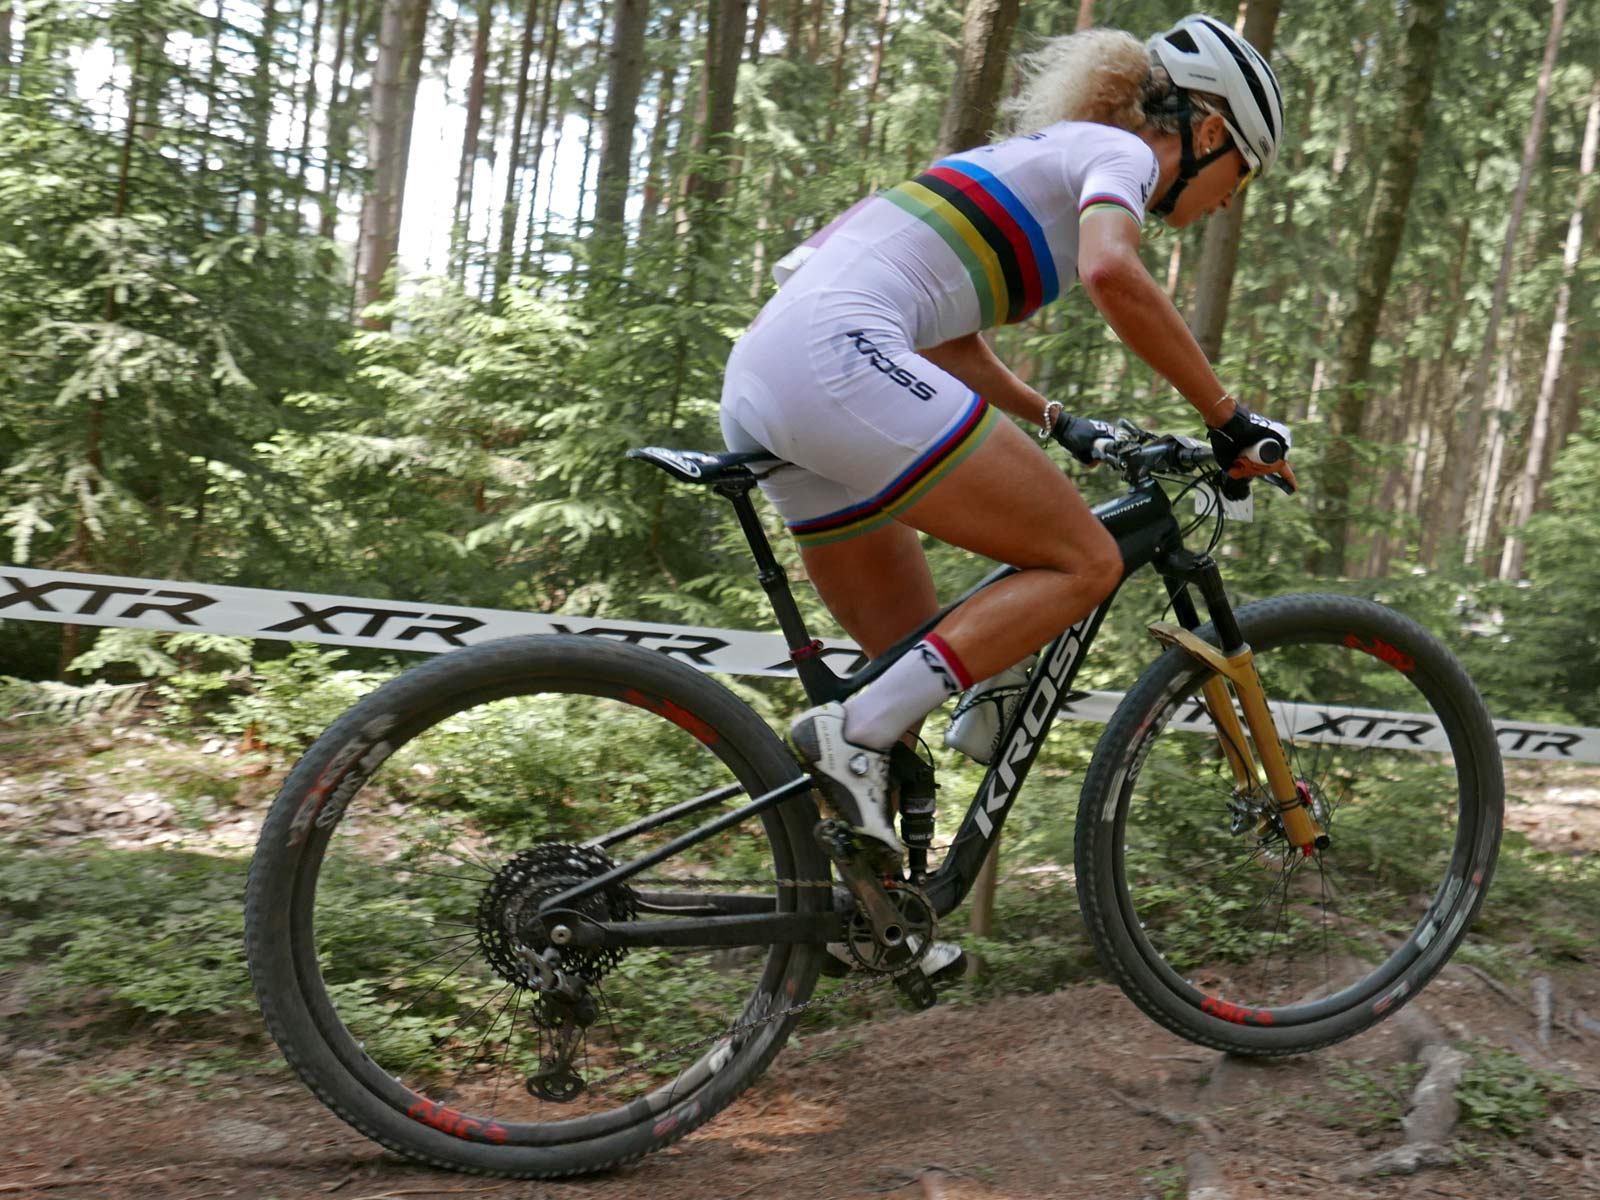 Prototype Kross Earth 100mm made in EU carbon full suspension 29er XC race mountain bike Jolanda Neff Nove Mesto rear